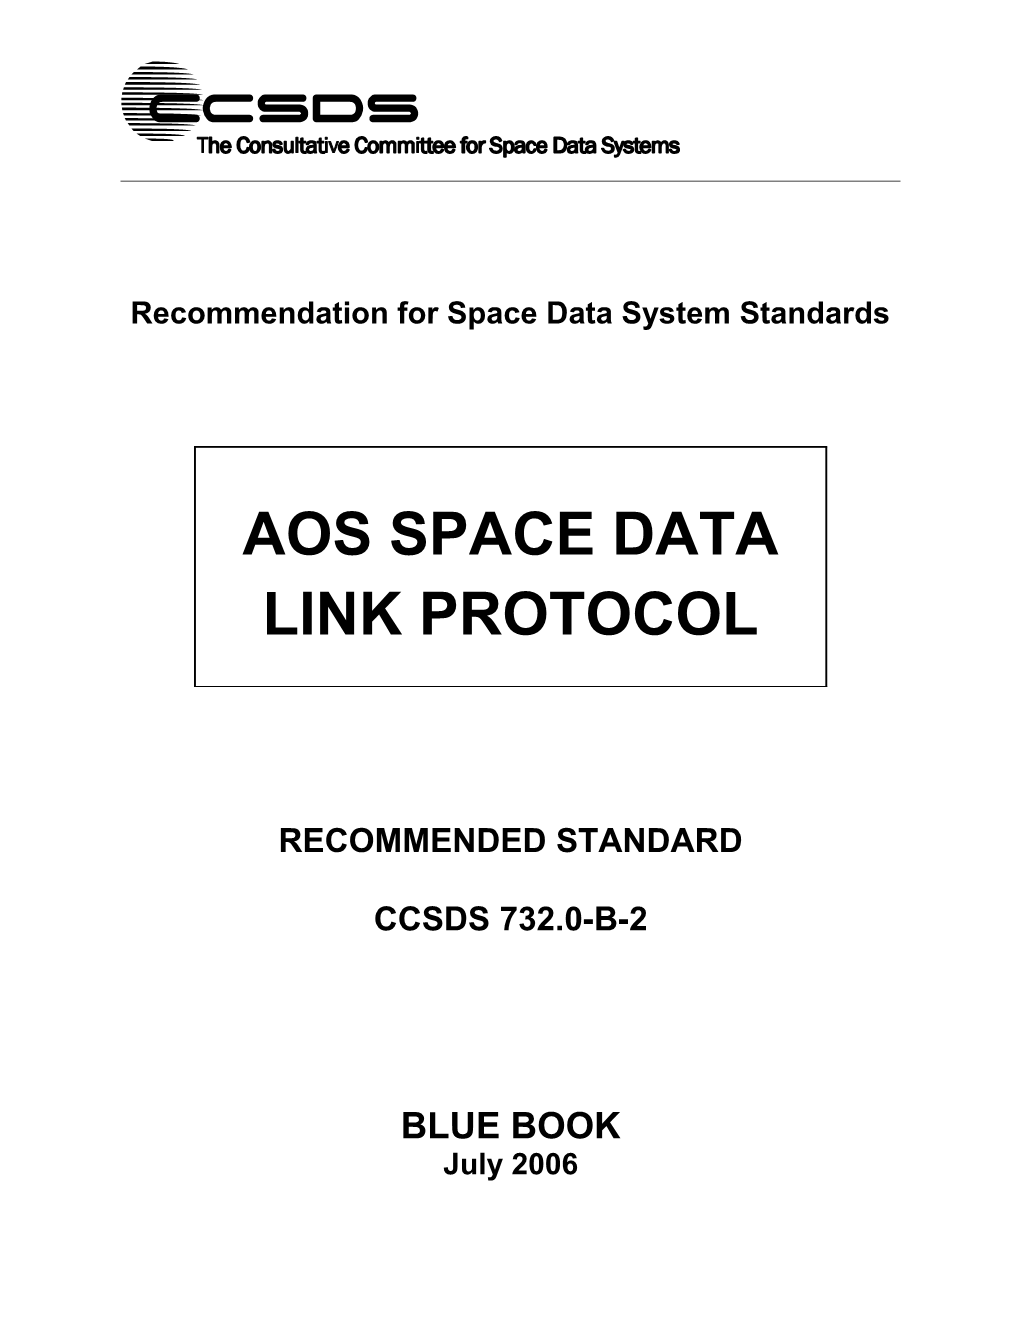 AOS Space Data Link Protocol